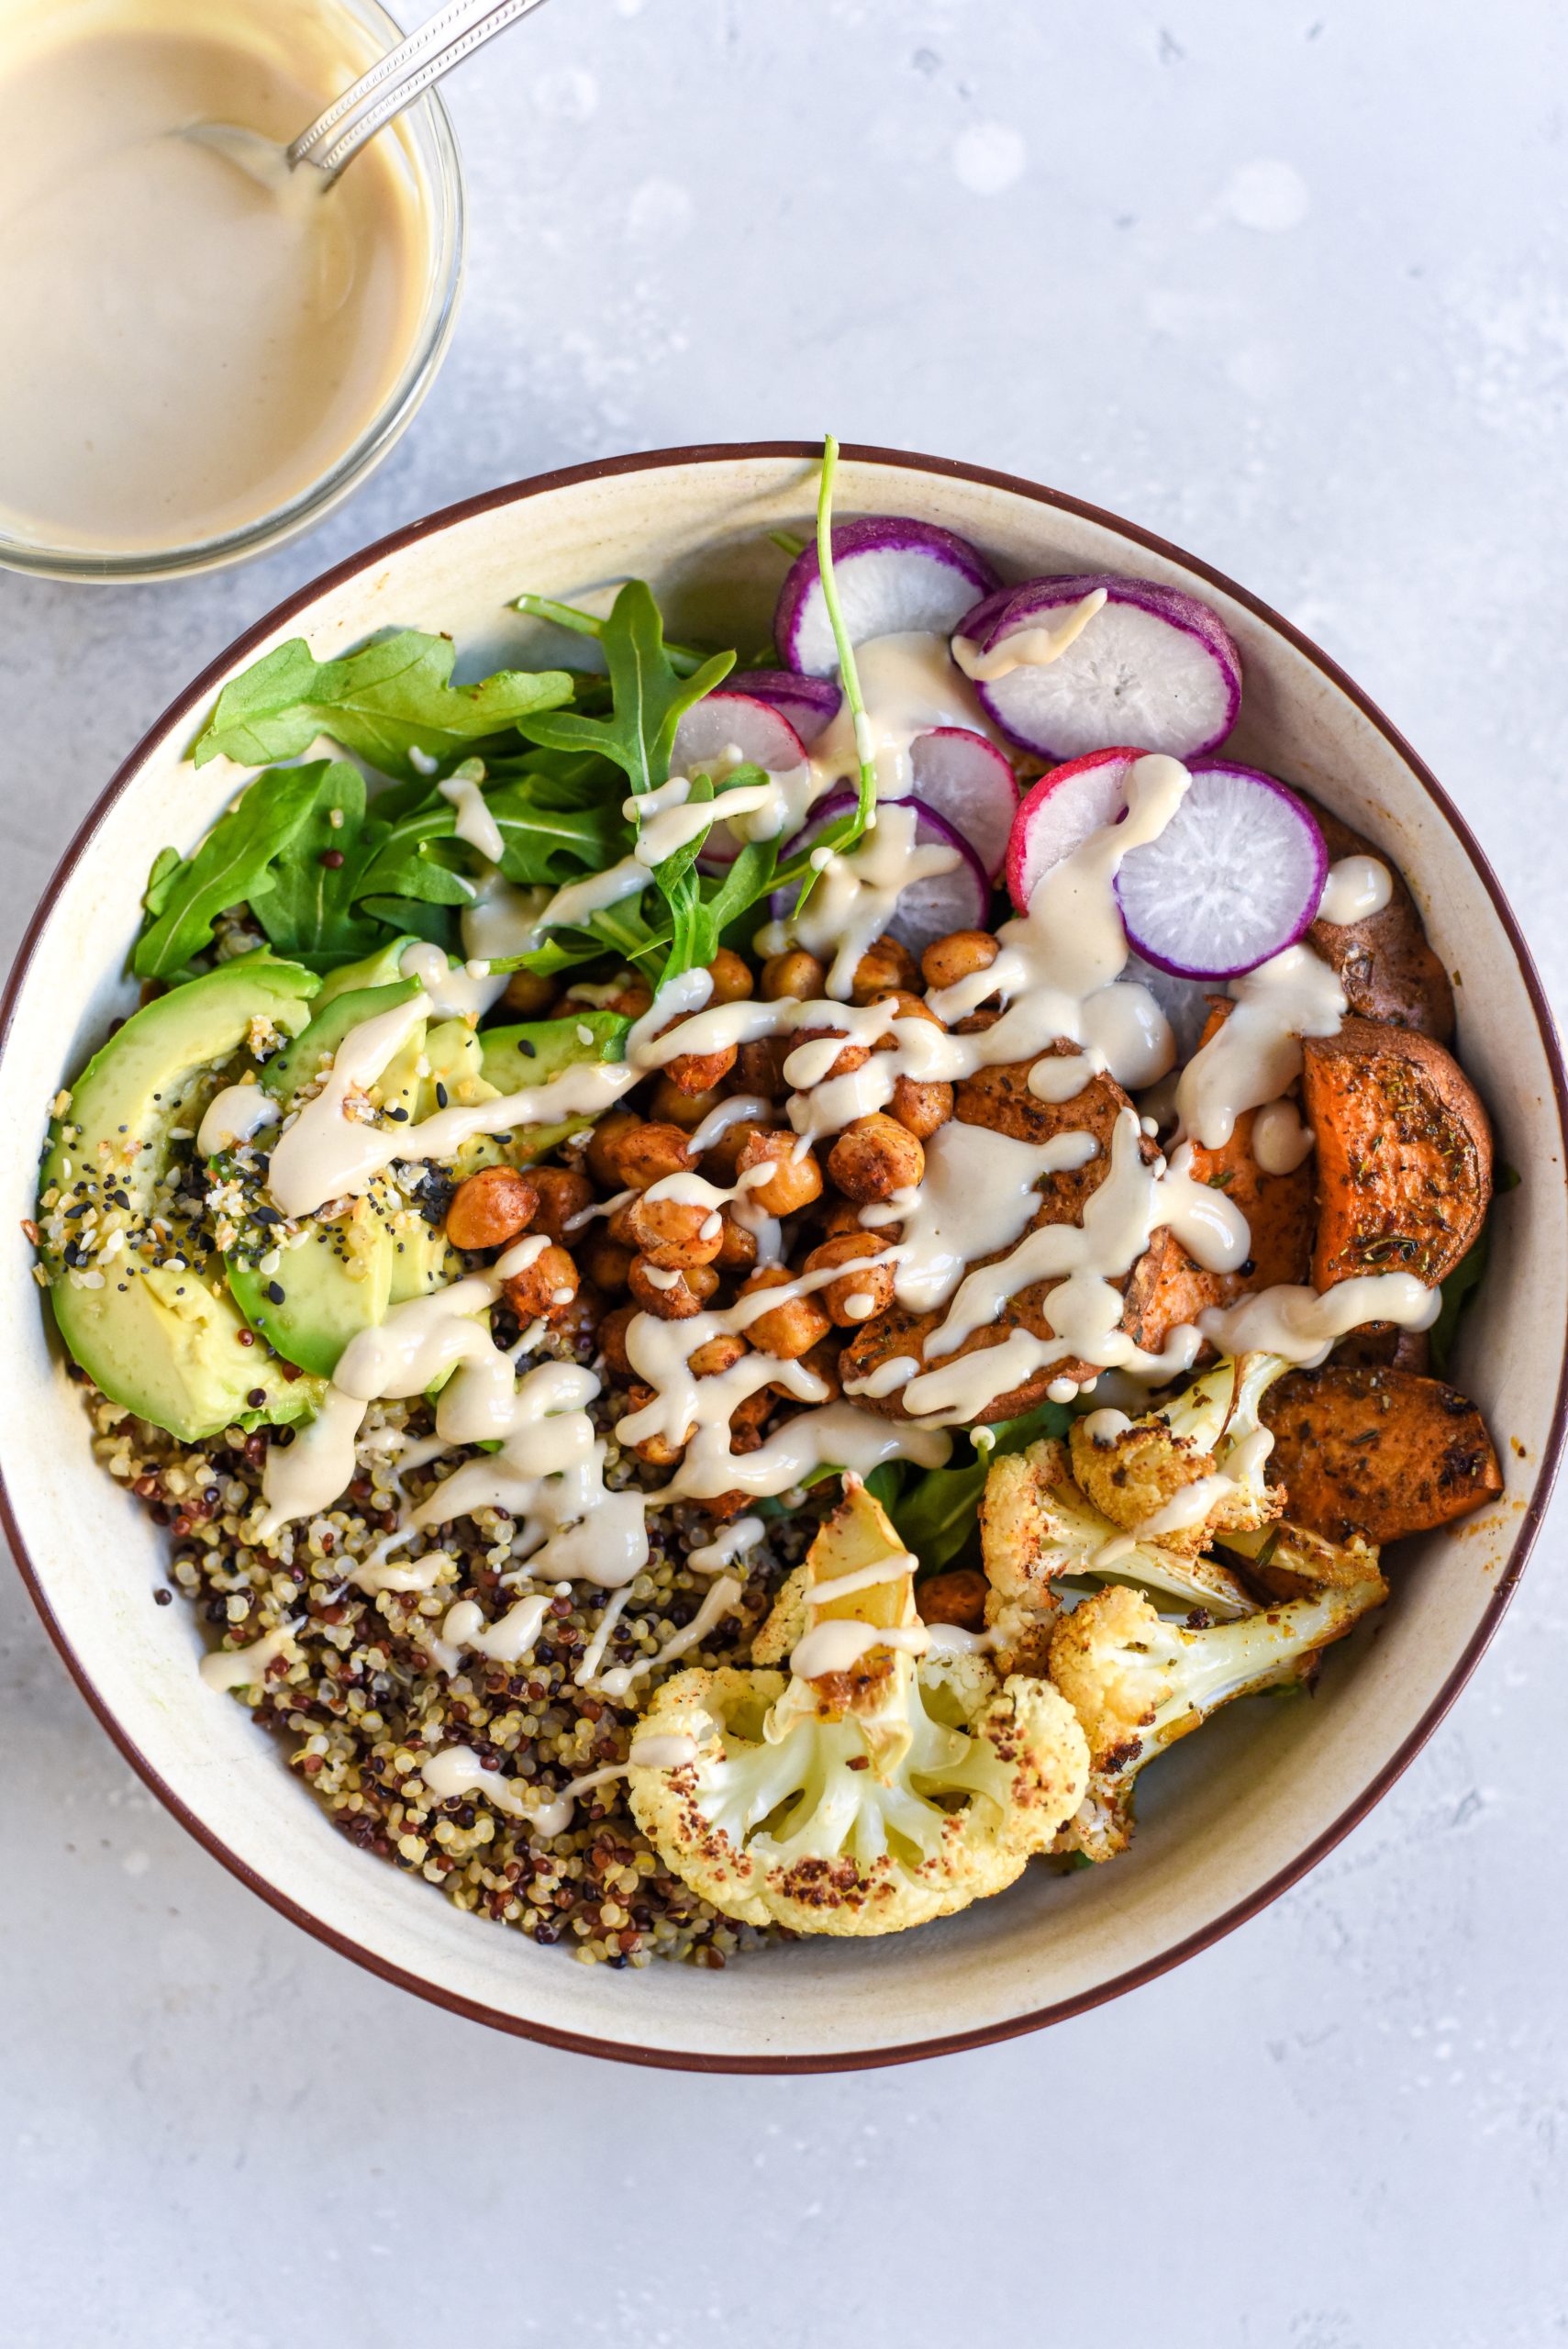 Get tasty vegan dishes from vegan restaurants in Big Bear.